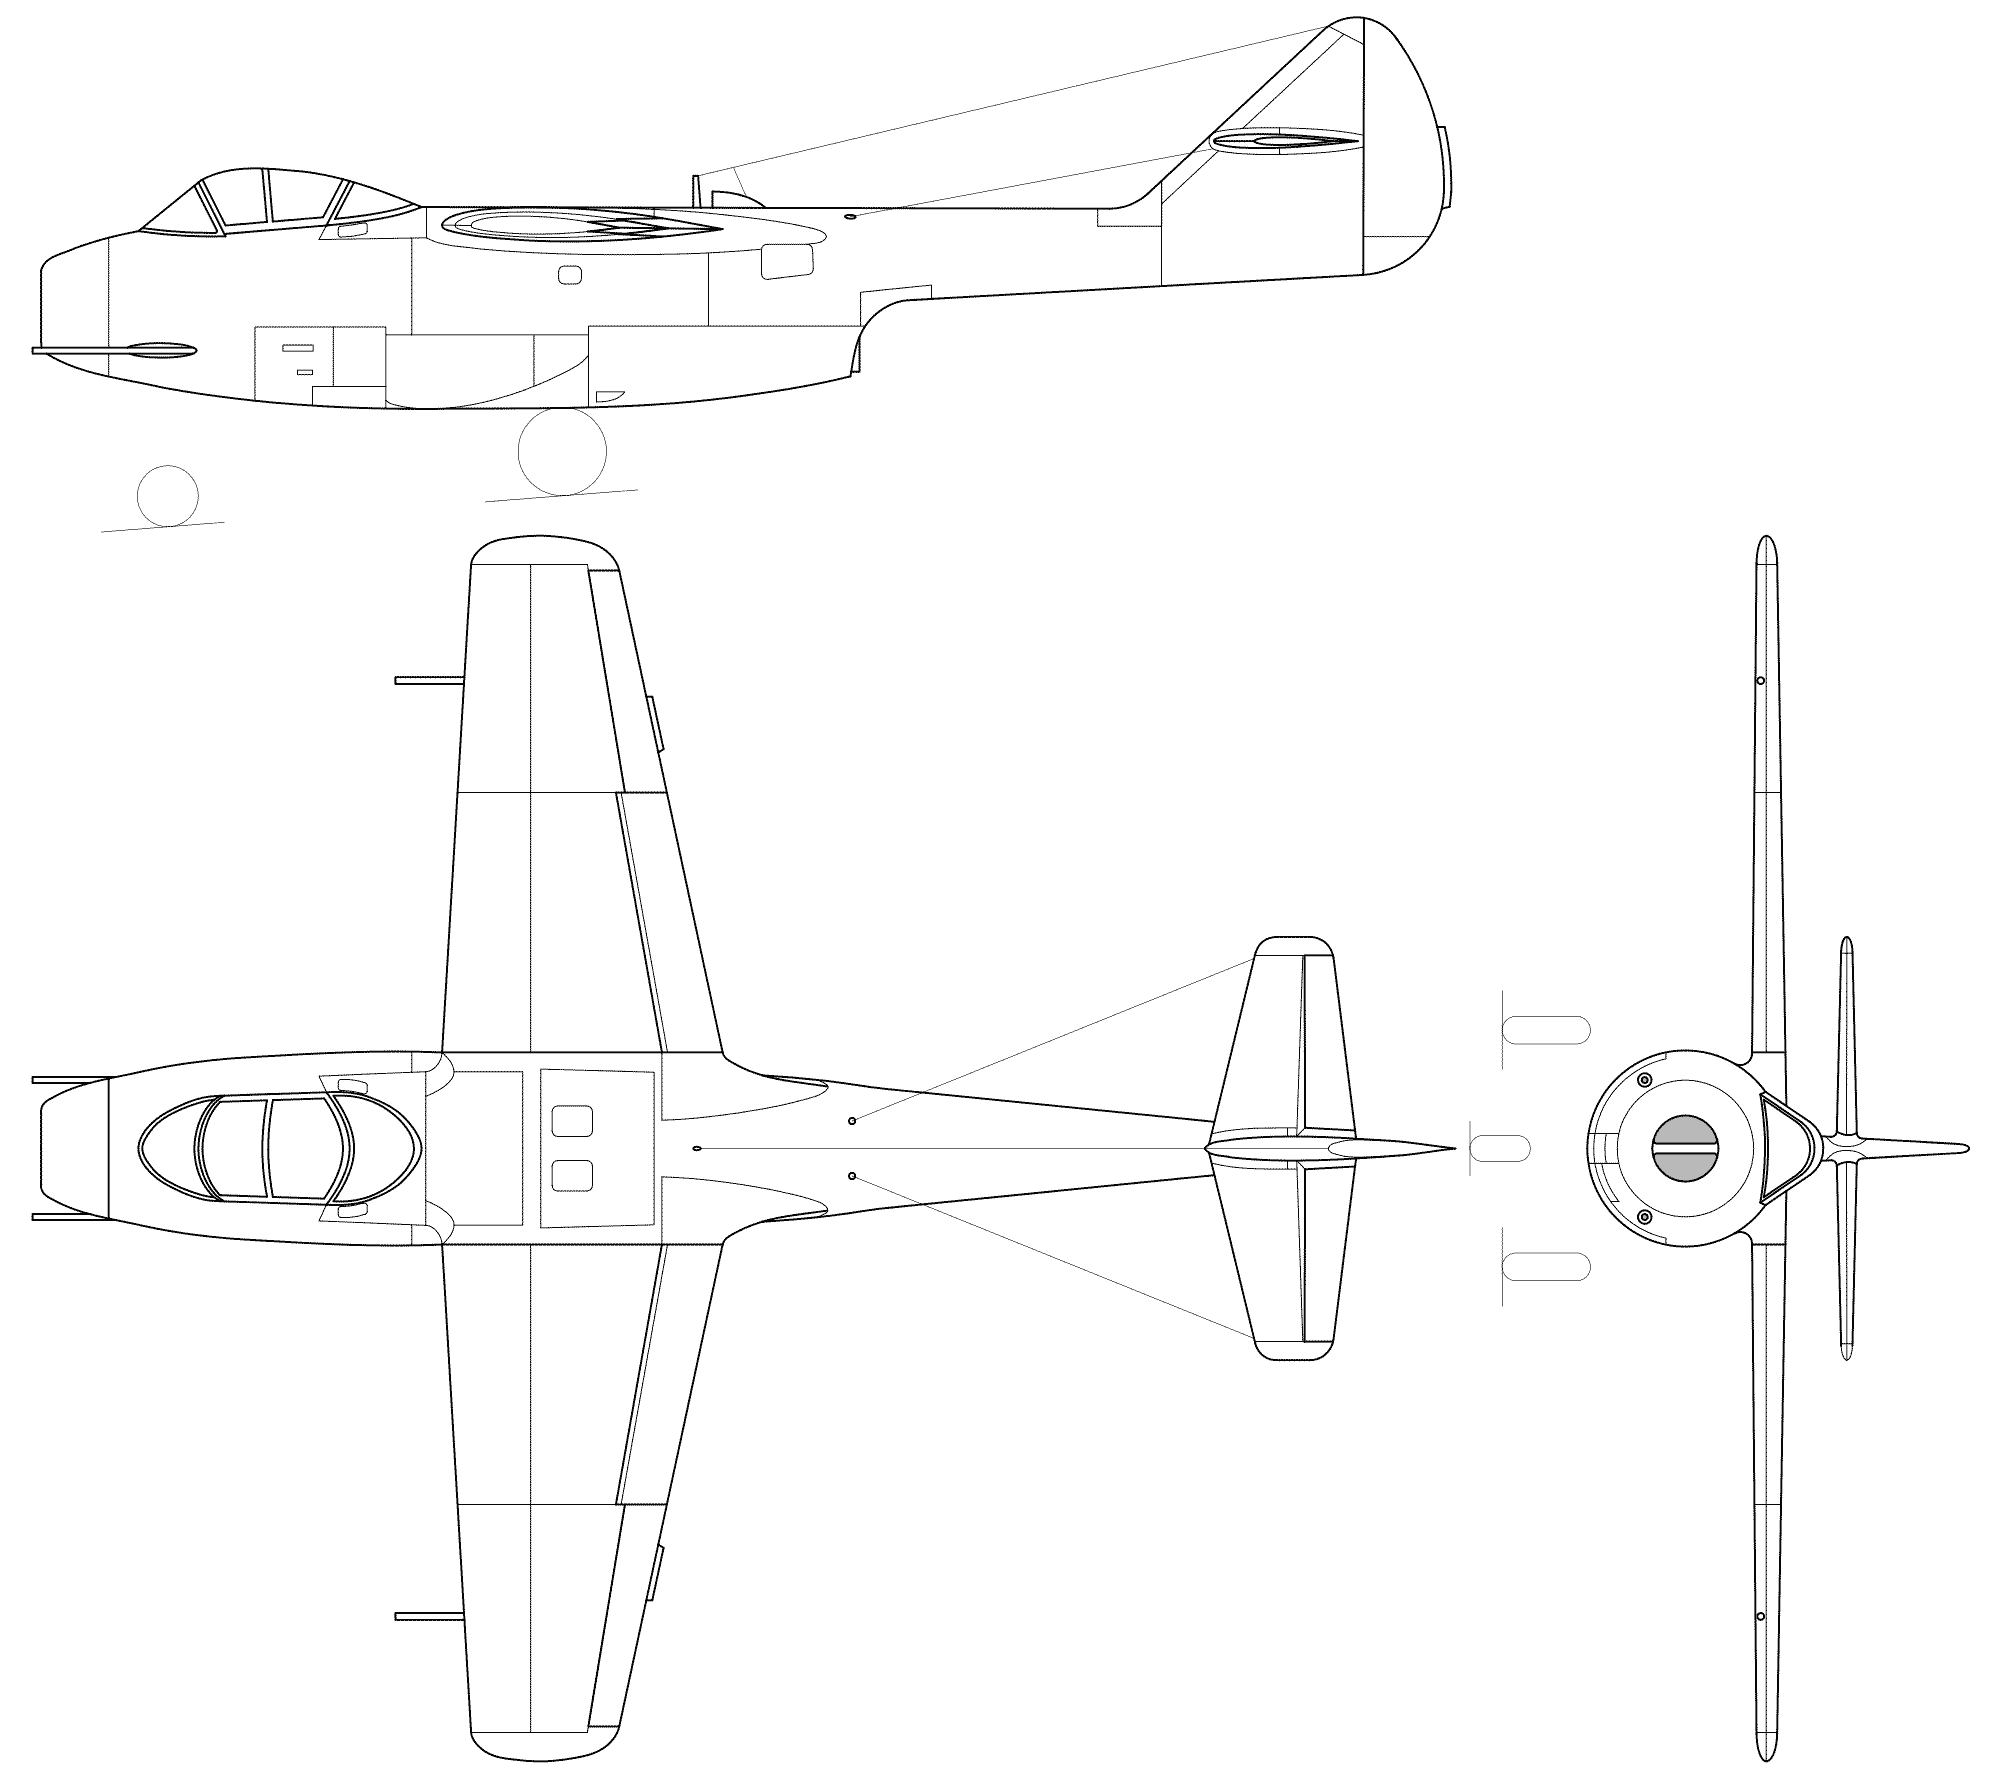 La-150 blueprint